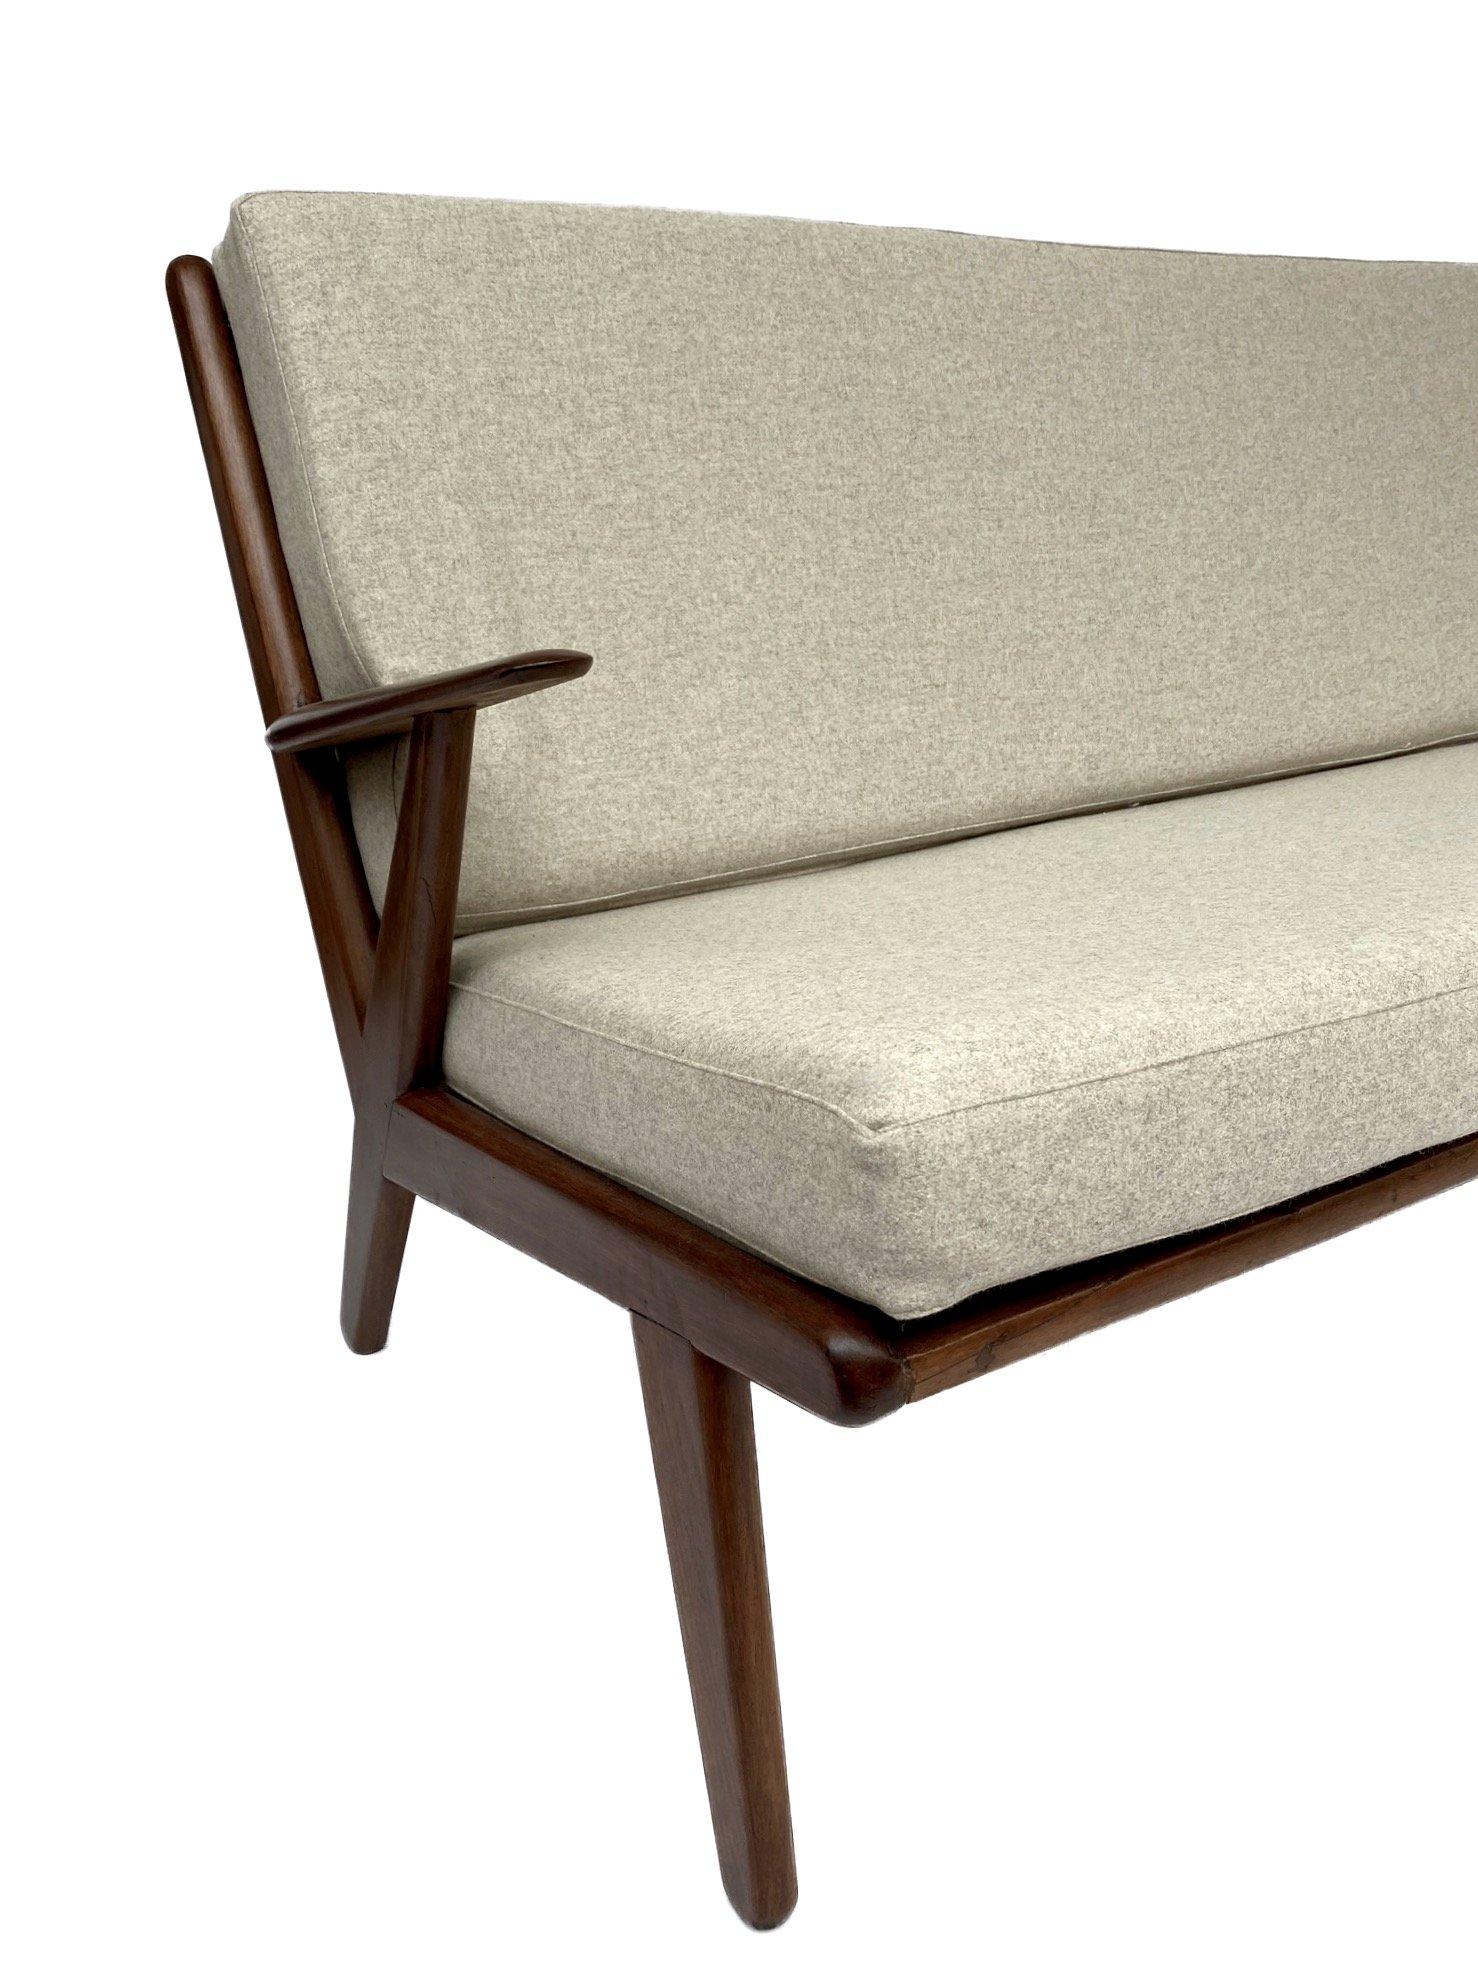 20th Century Ercol Cream Wool and Teak 3 Seater Sofa